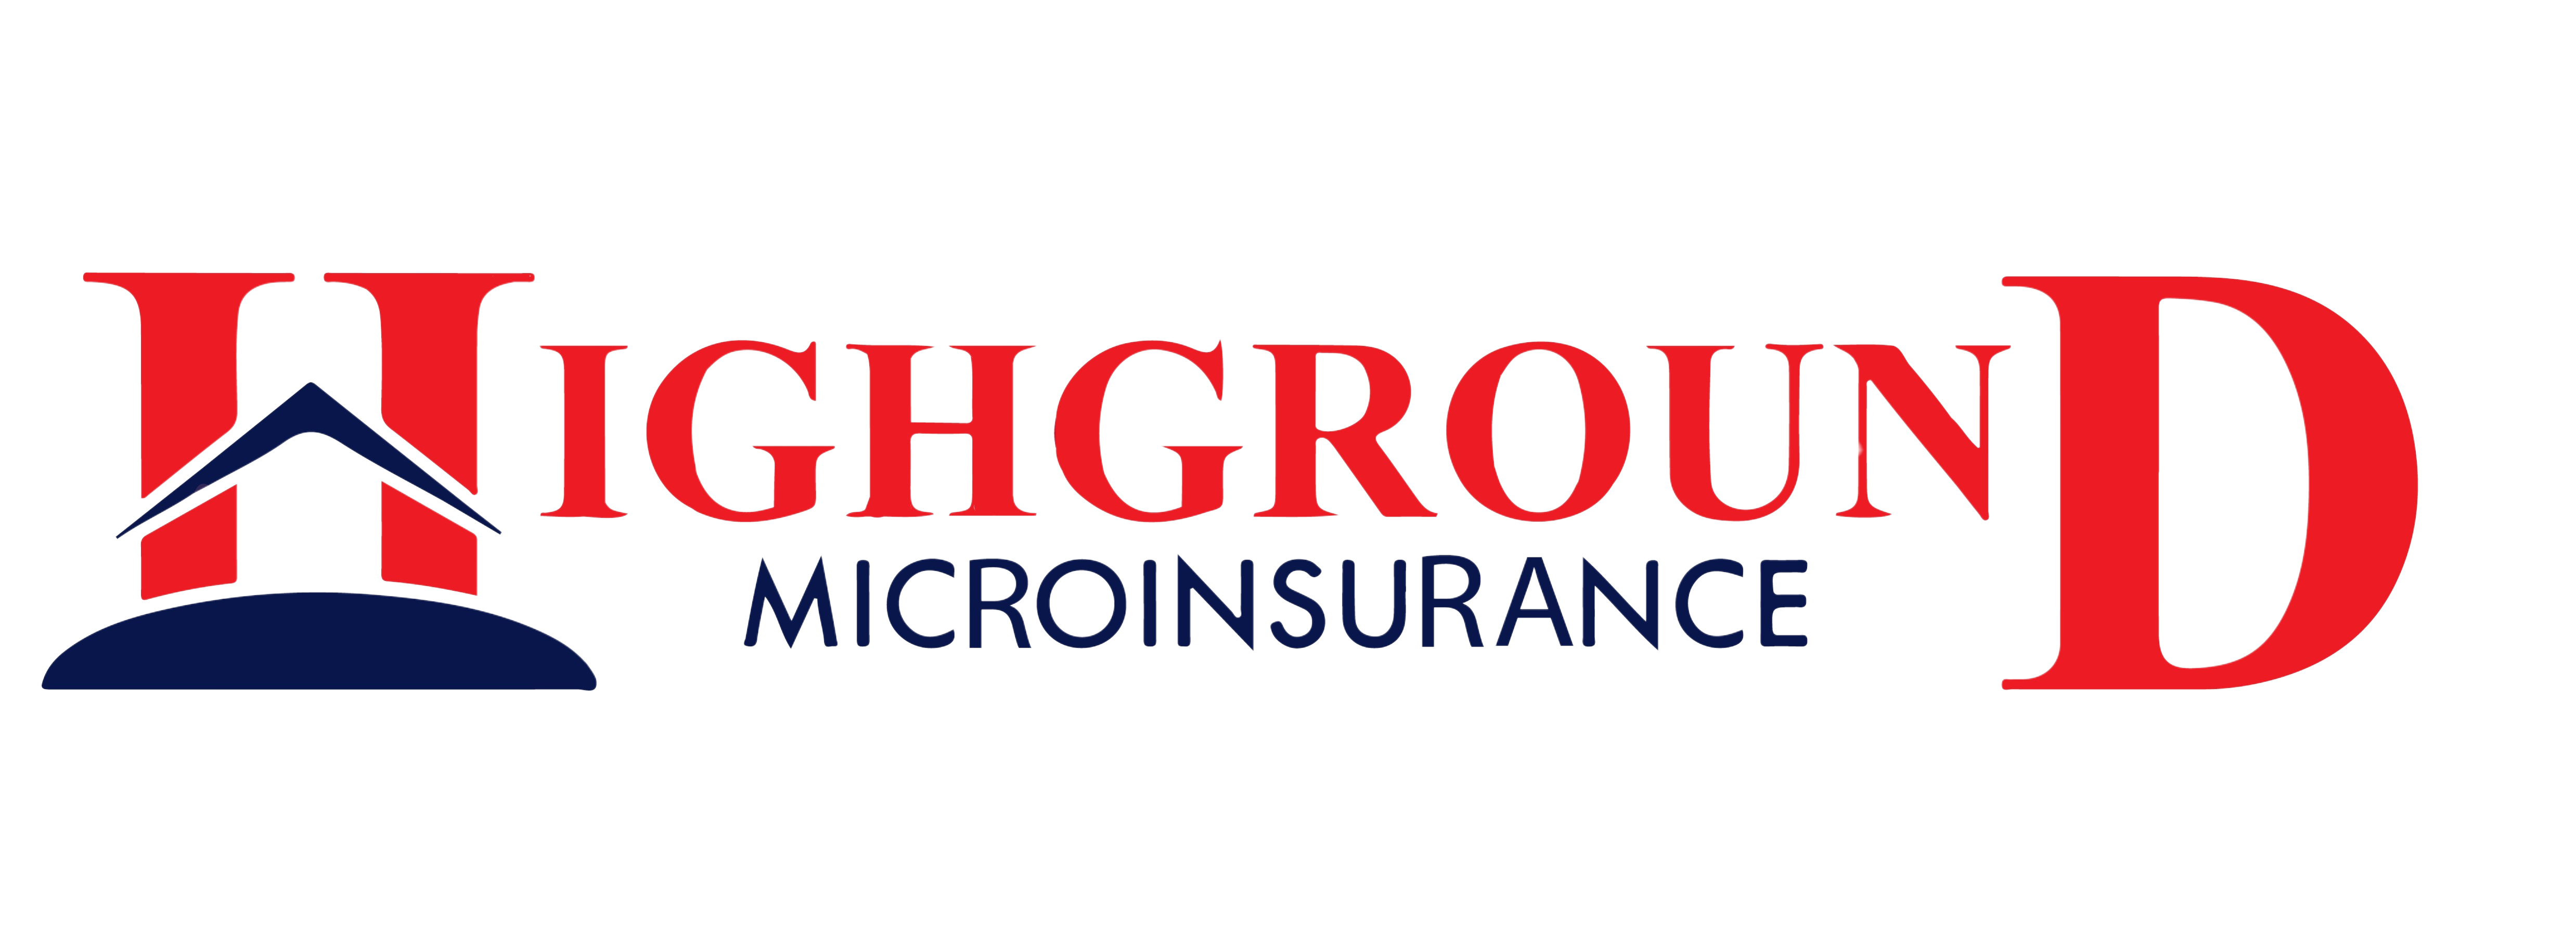 Highground Microinsurance Logo